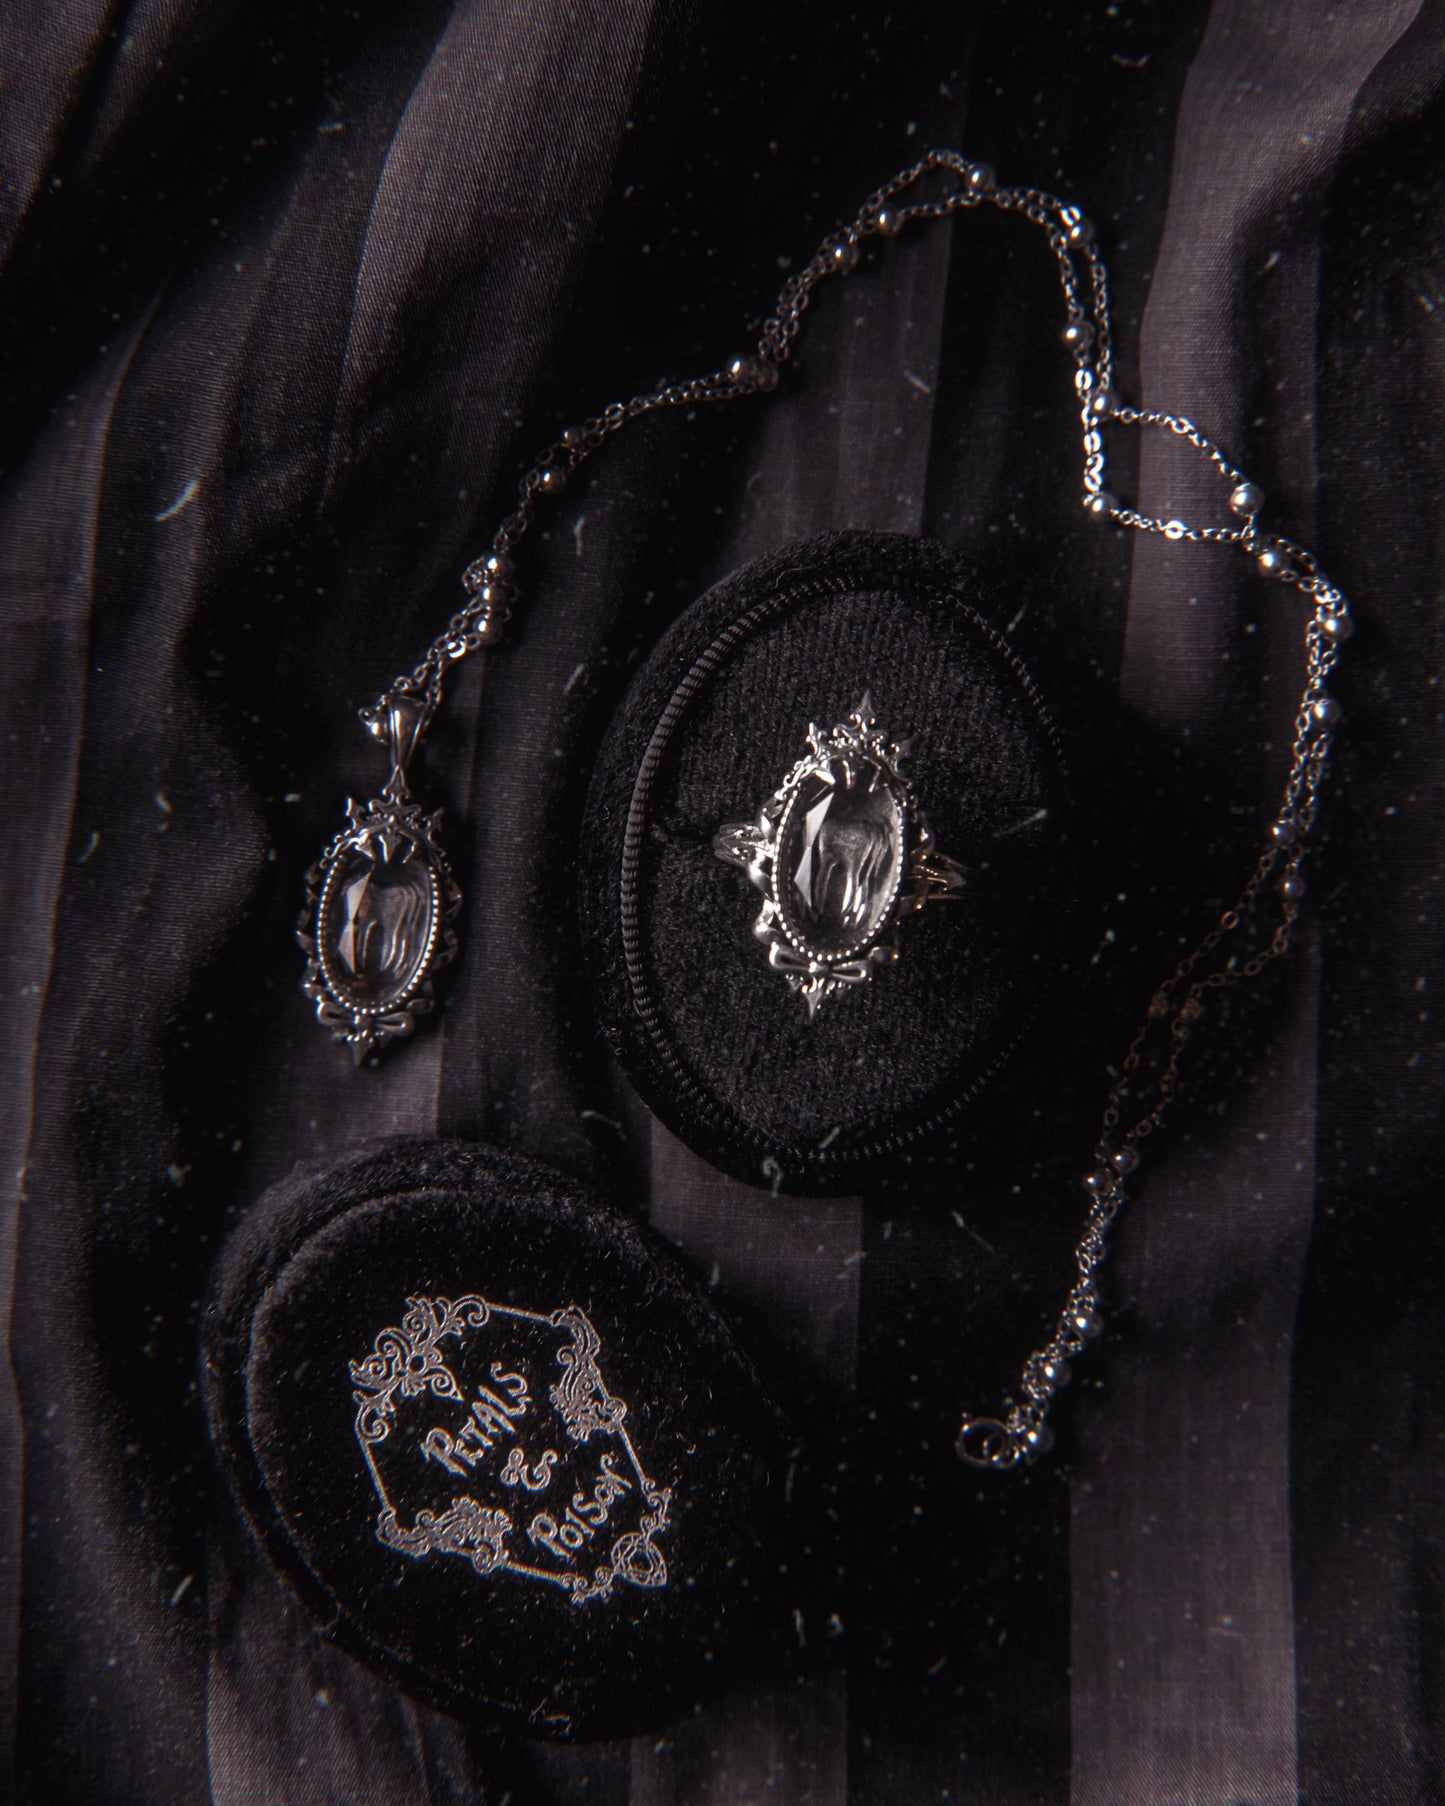 The "Black Ribbon Asylum" Glass Casket Necklace